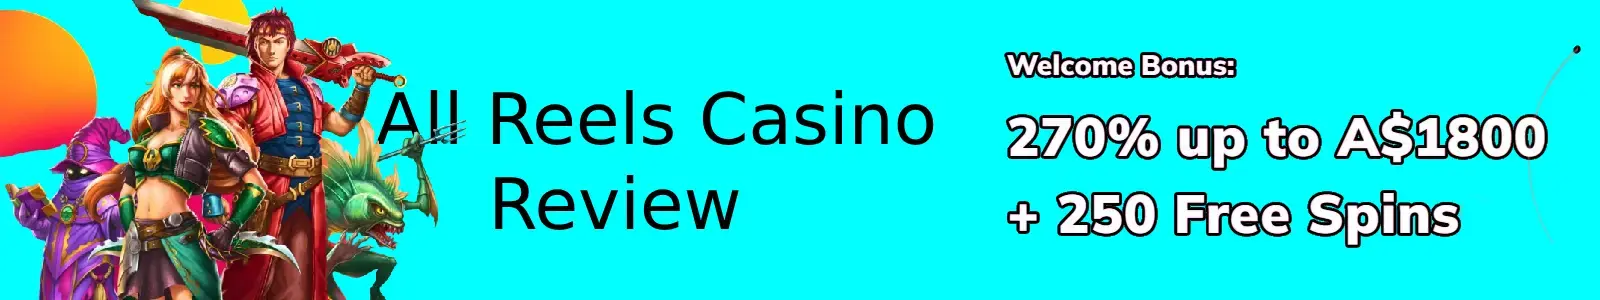 All Reels Casino Welcome Bonus